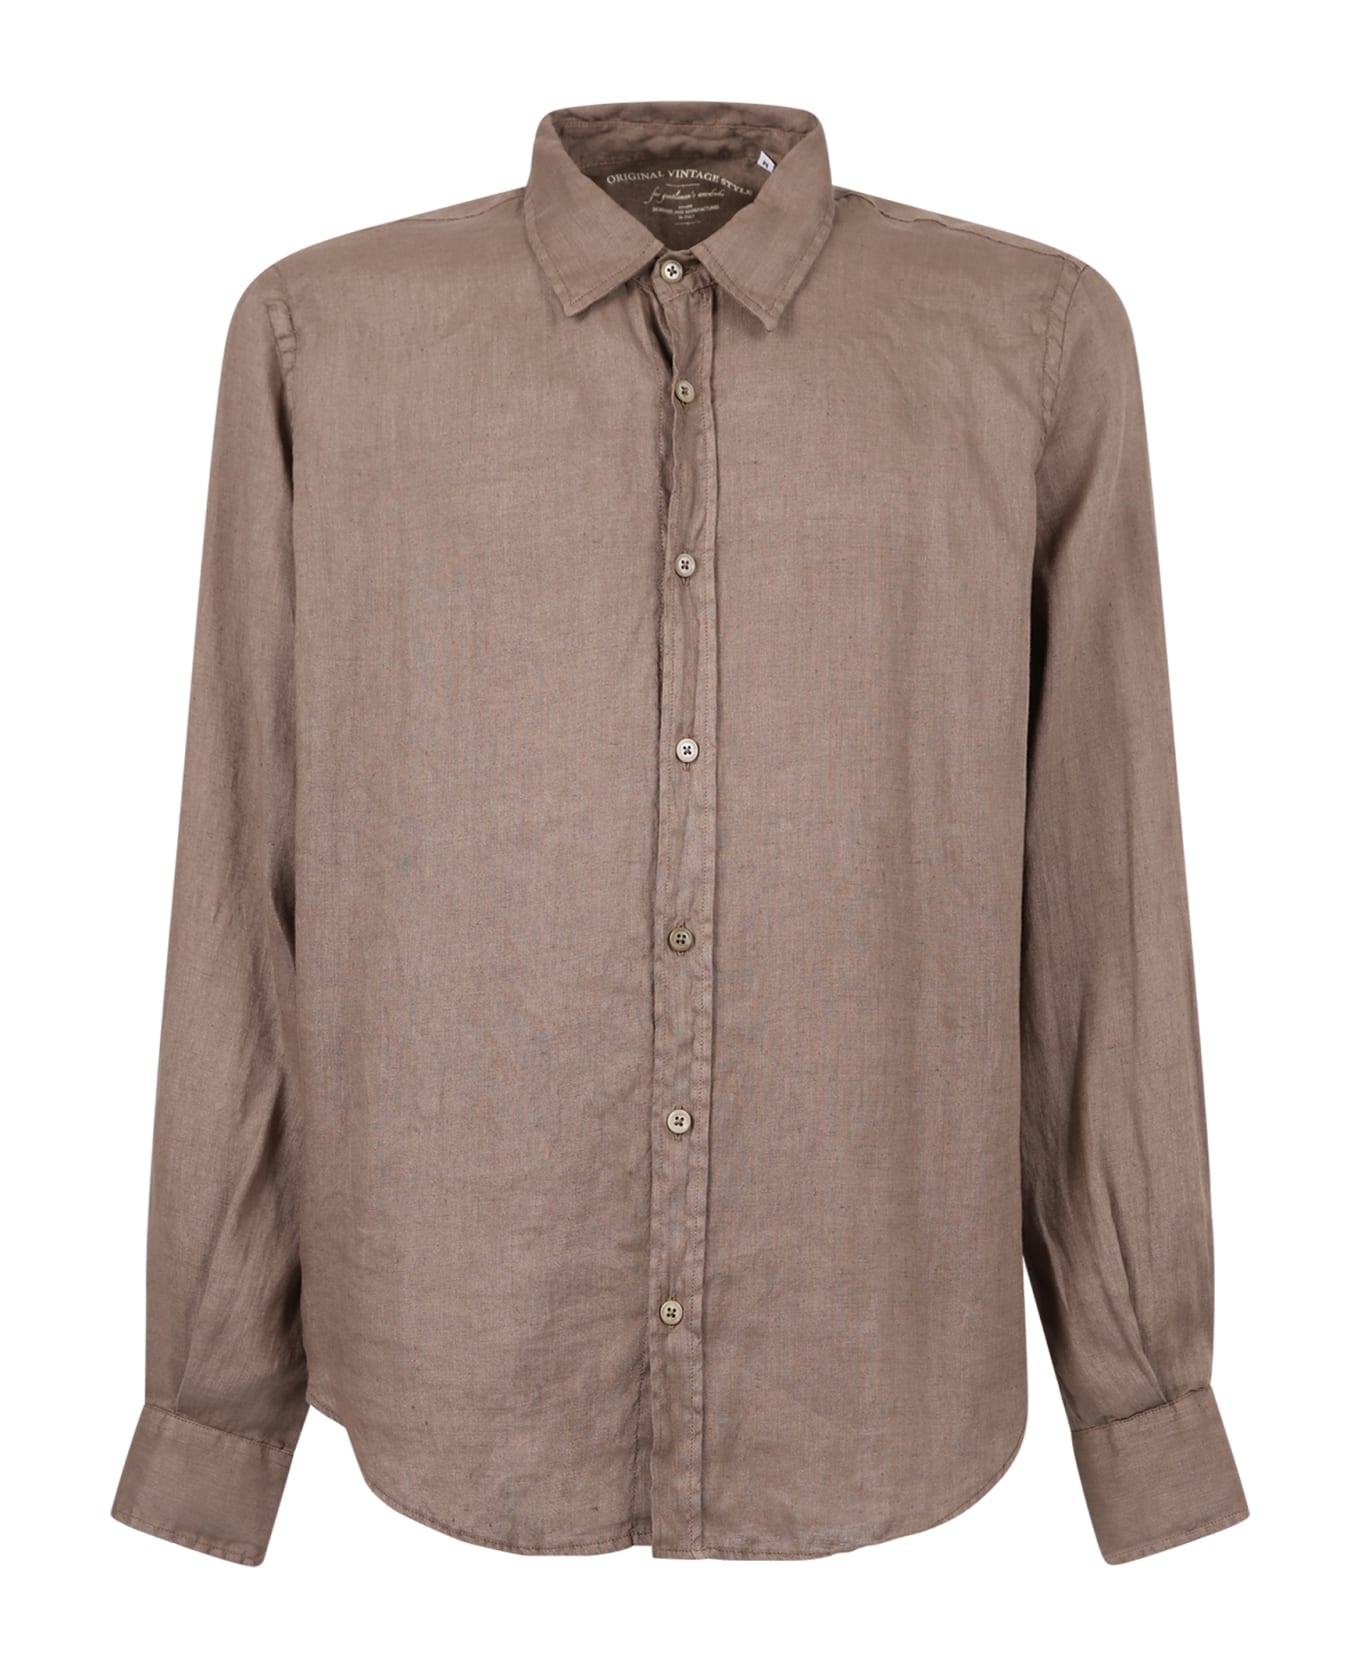 Original Vintage Style Linen Shirt - Beige